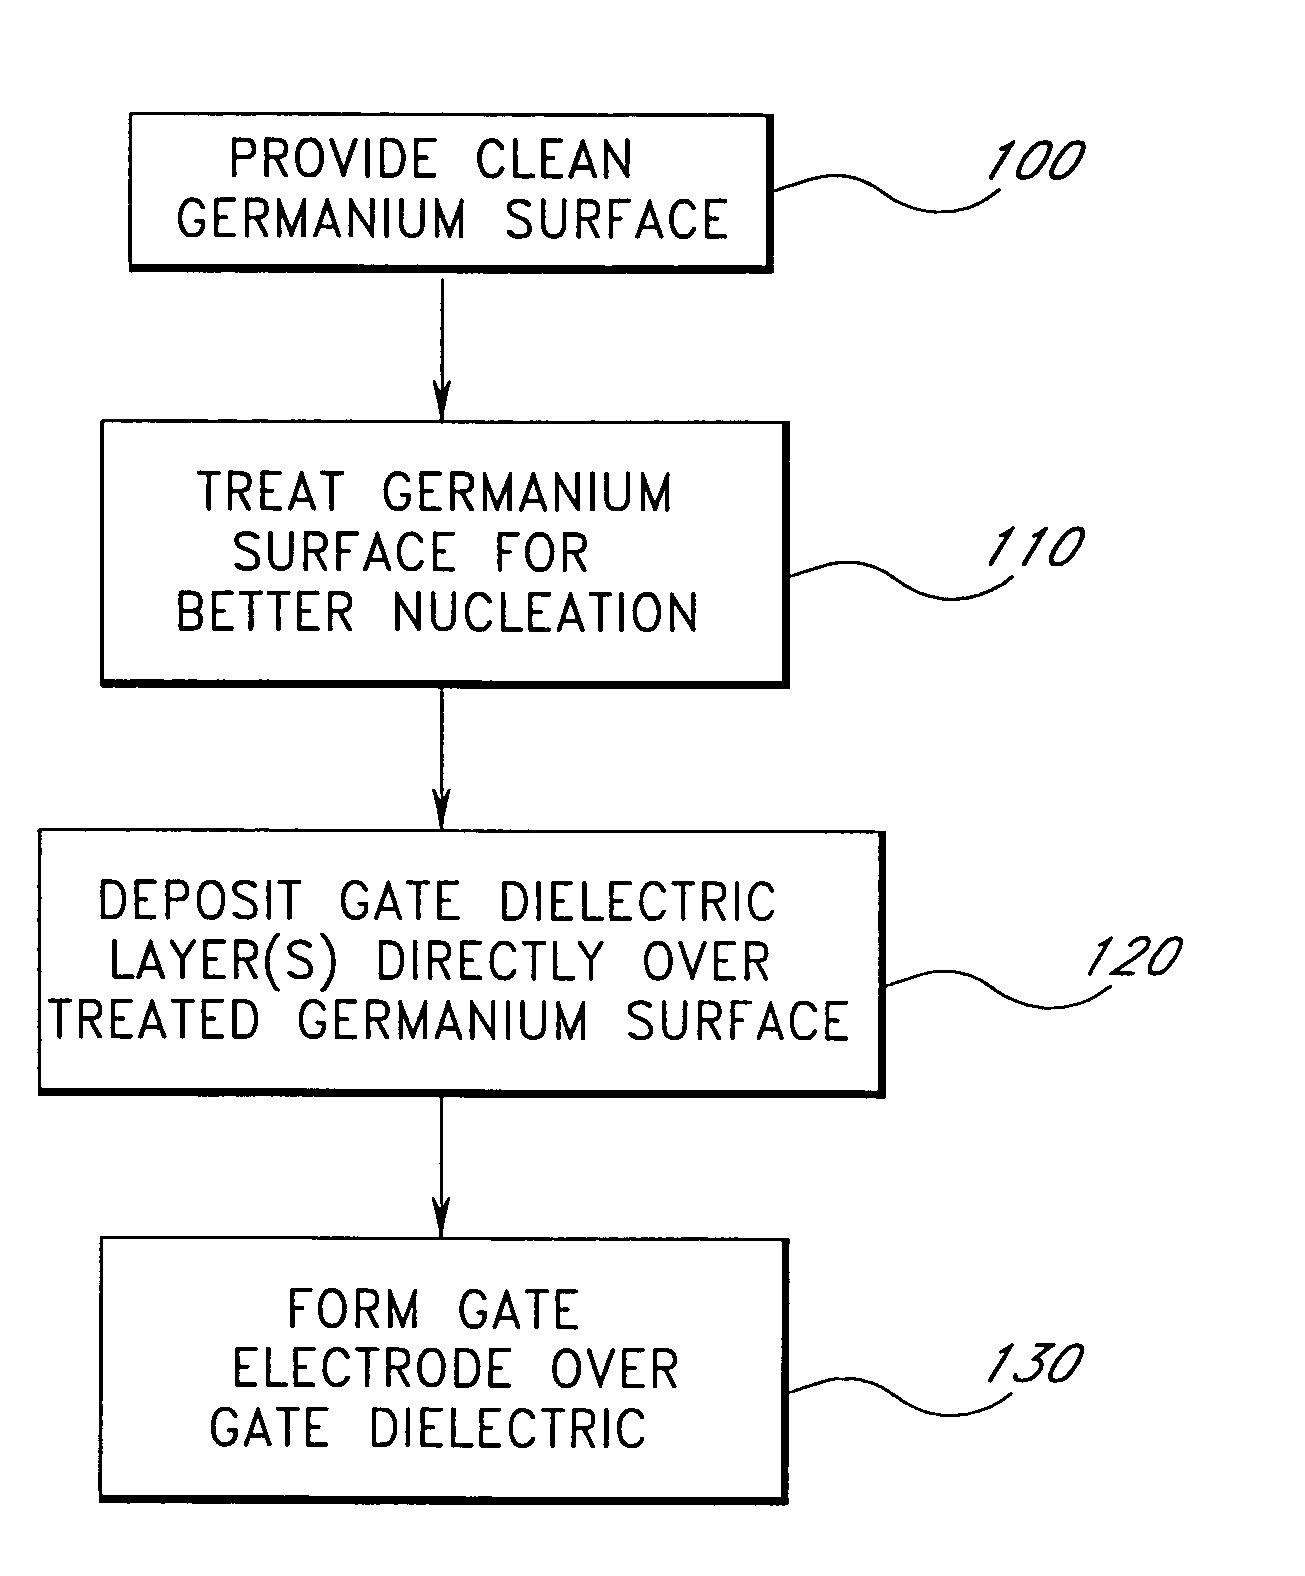 Surface preparation prior to deposition on germanium